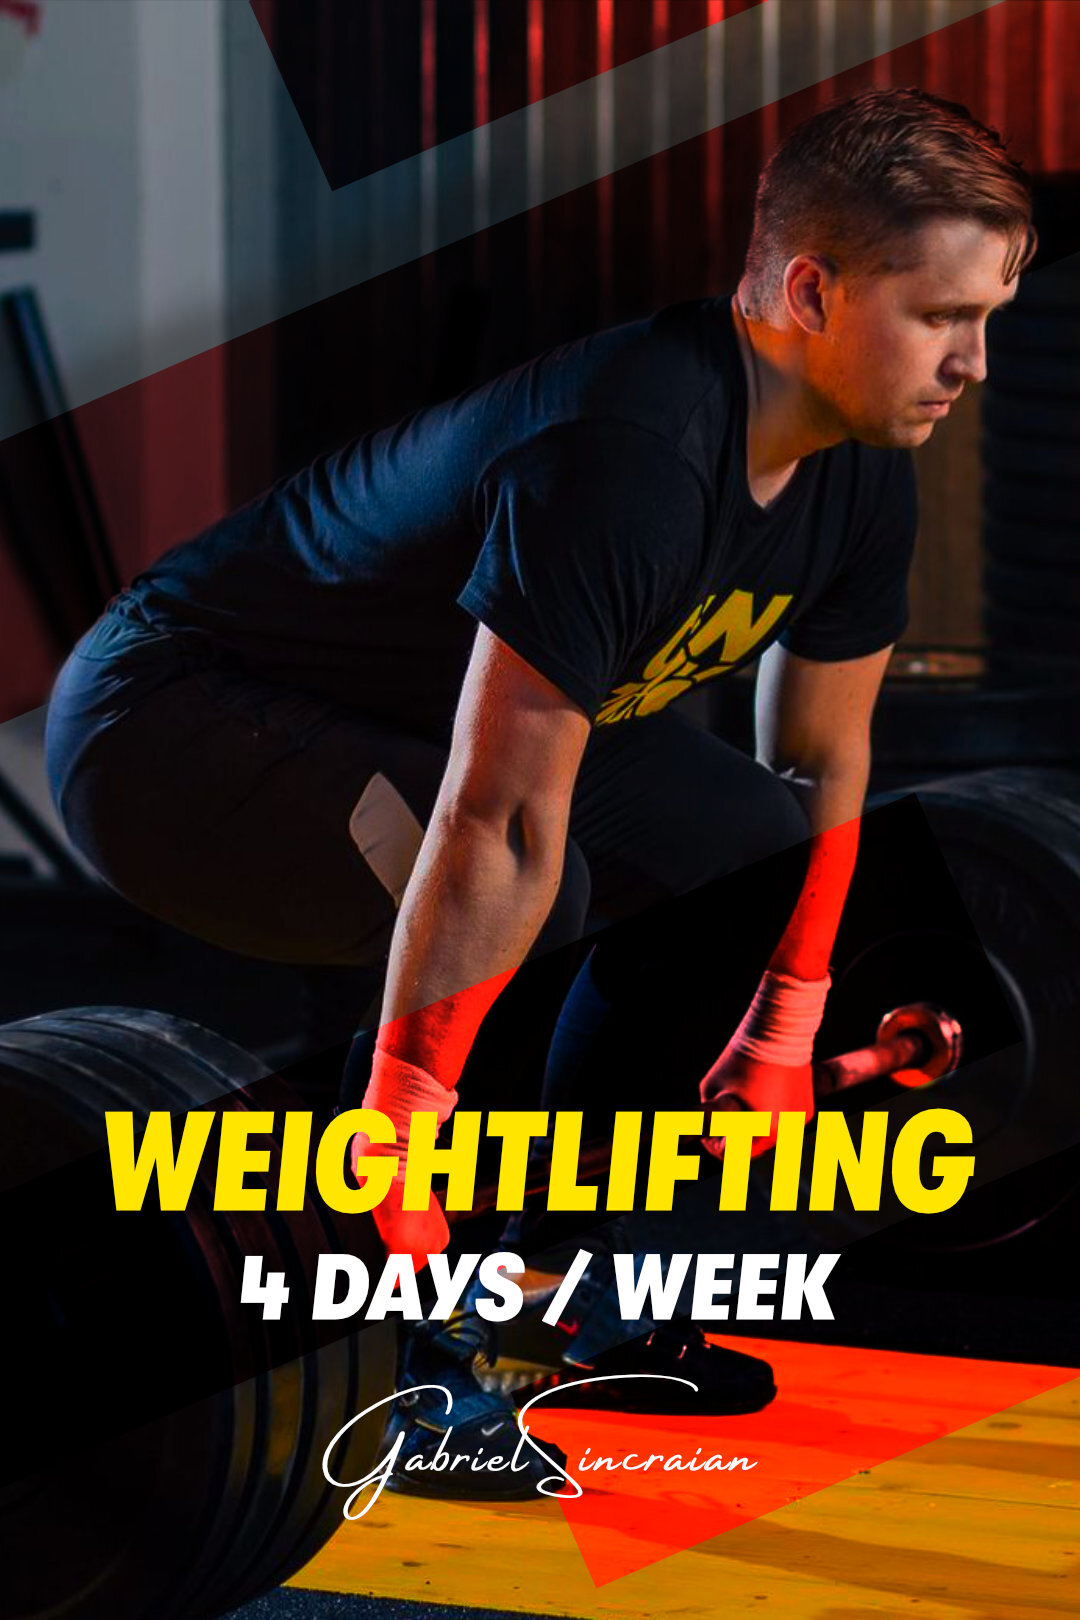 4 Days / Week Weightlifting